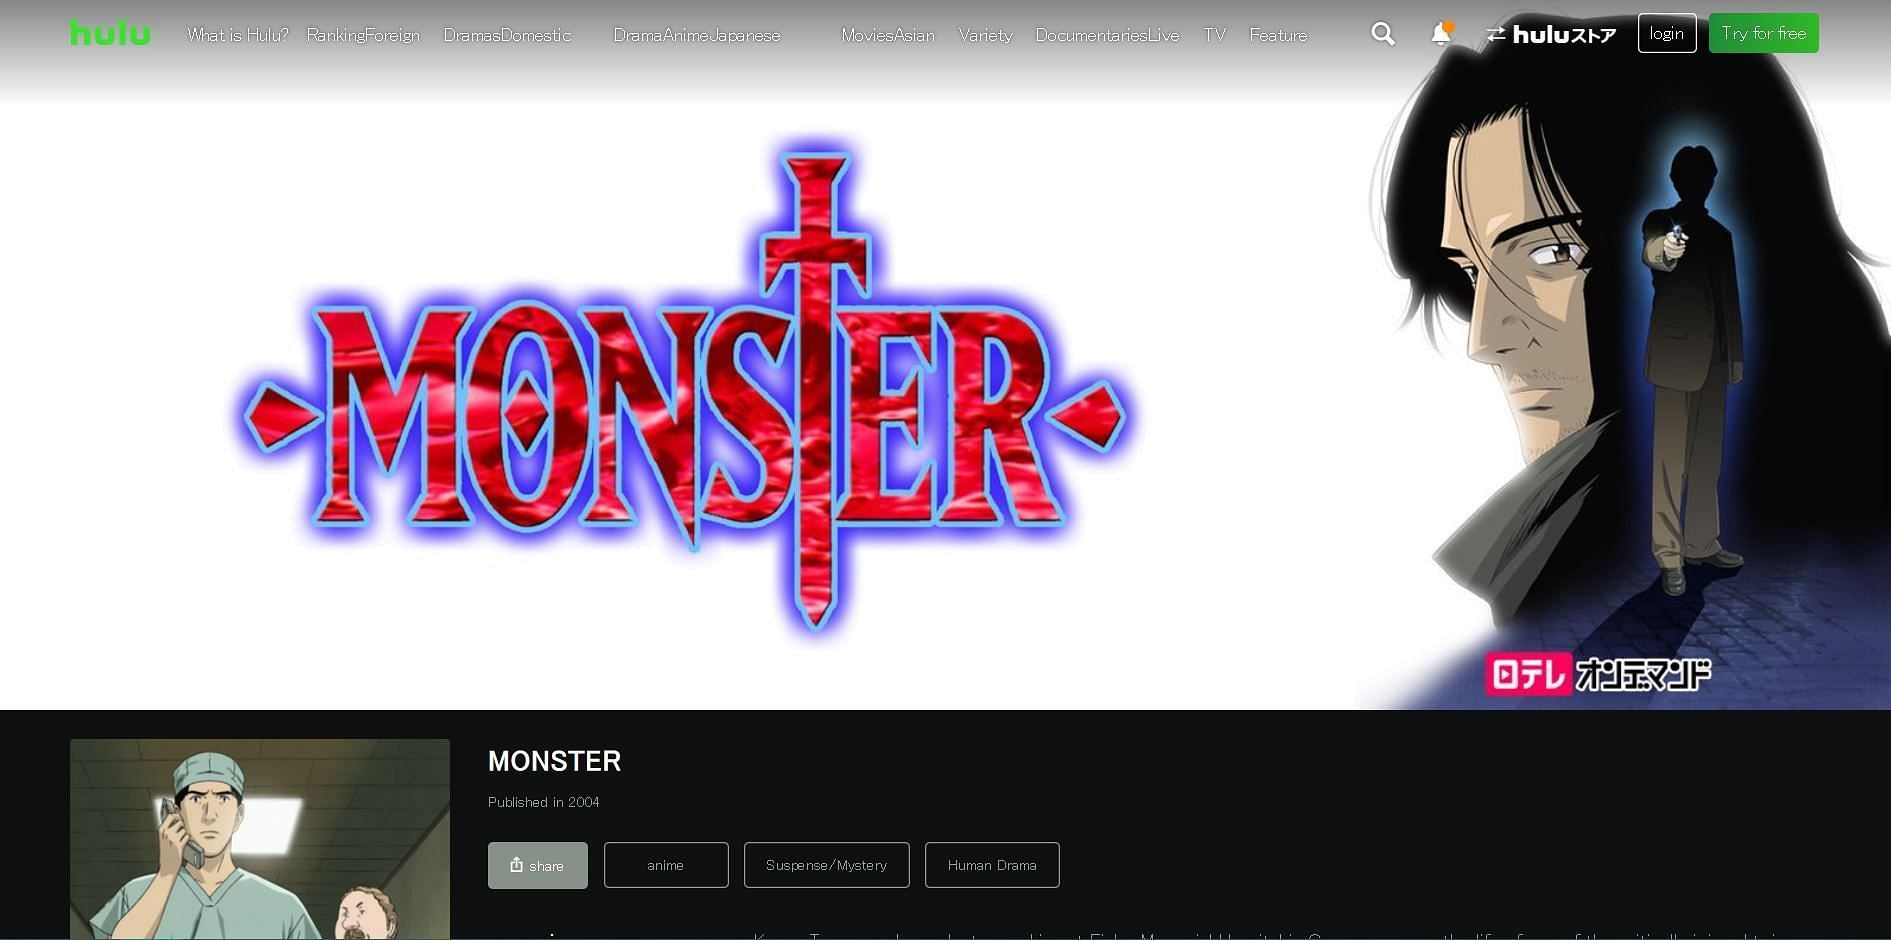 Details 131+ monster musume anime hulu latest - in.eteachers